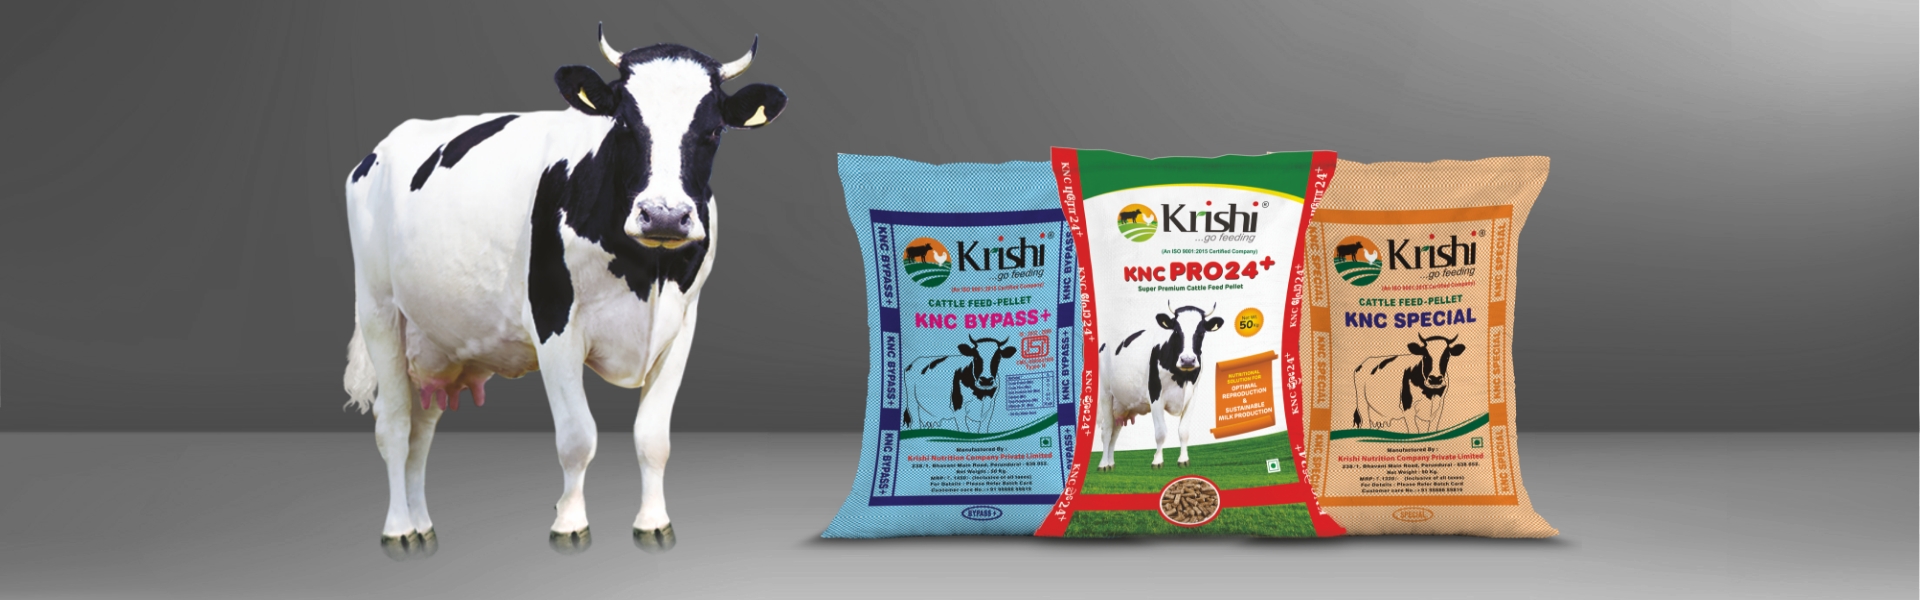 Krishi Cattle Feed – Krishi Nutrition